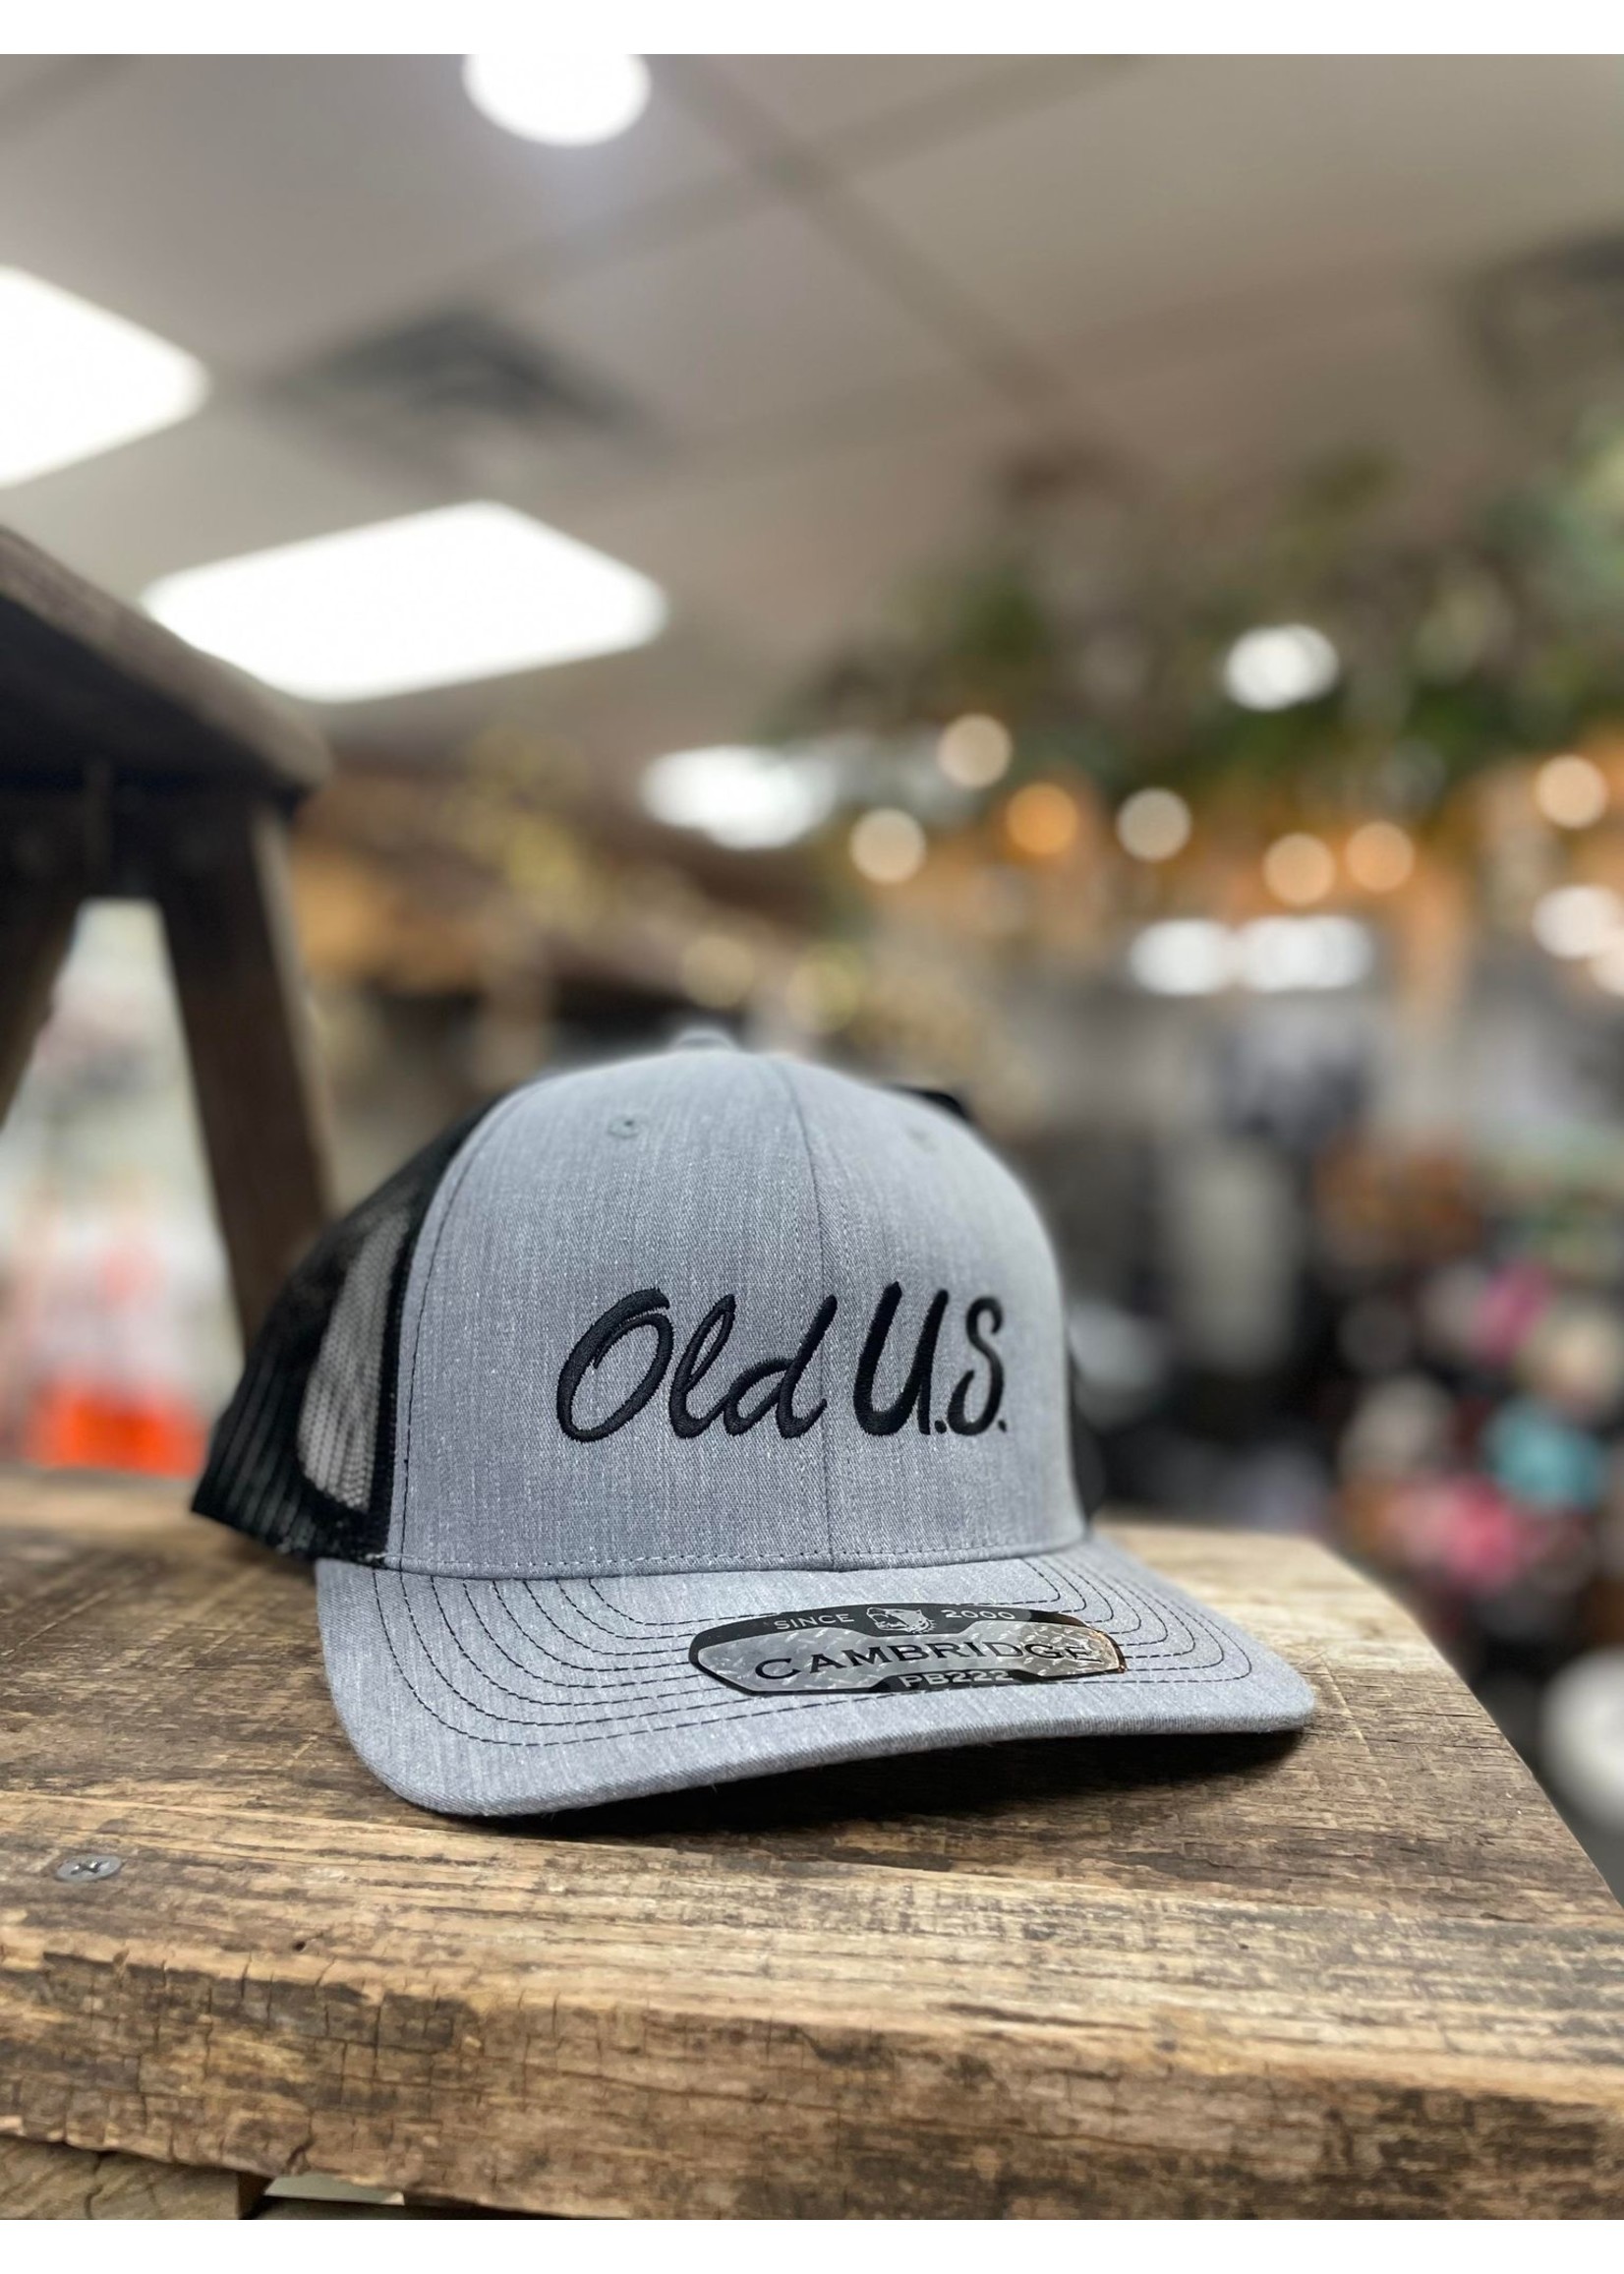 Old U.S Hats